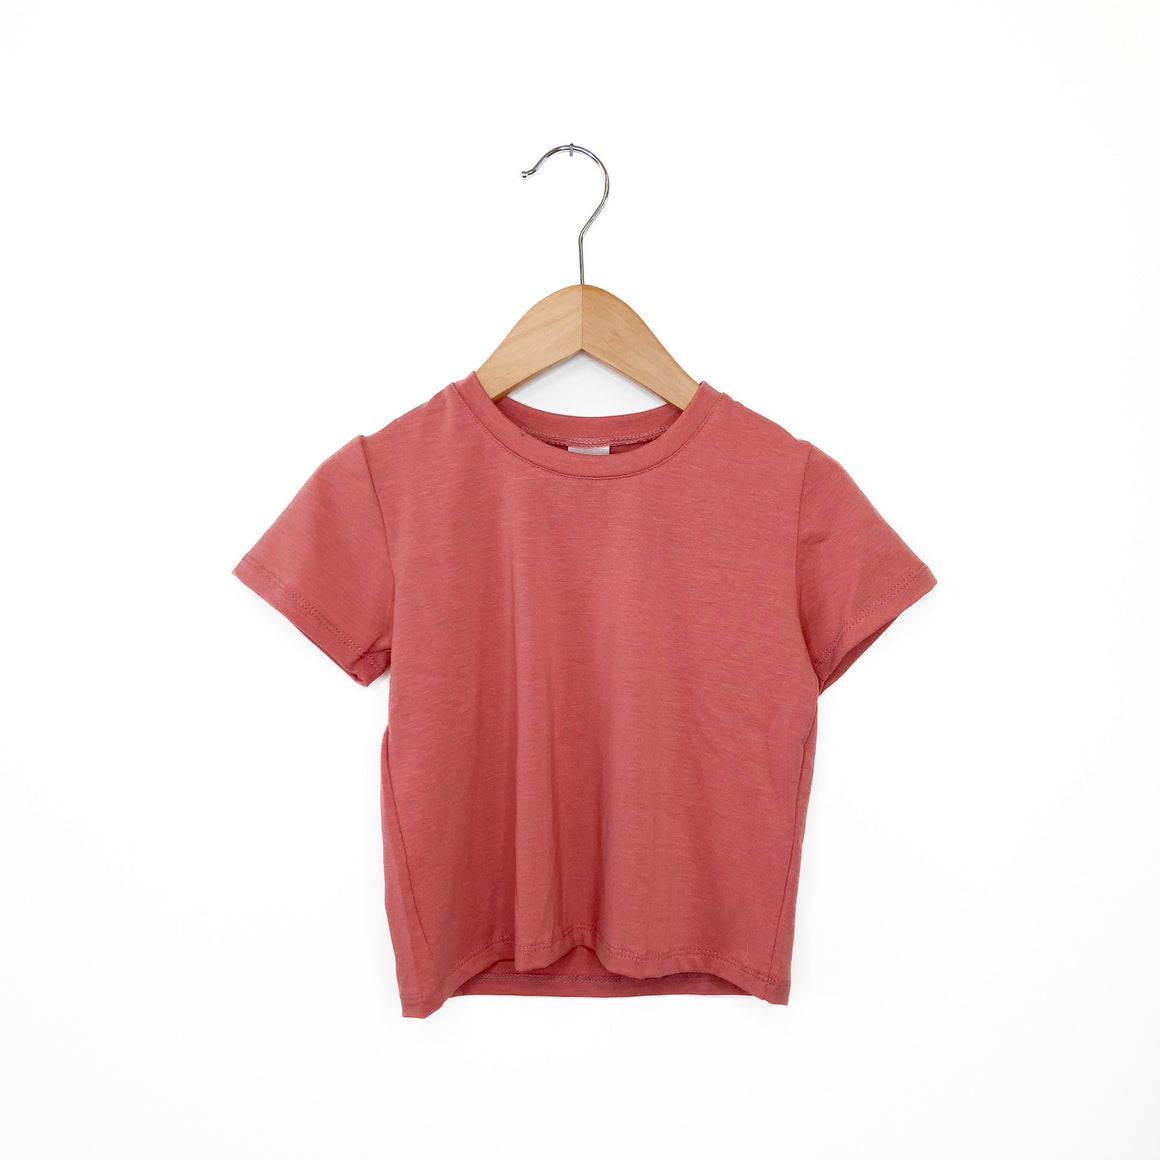 SALE! Basic Tee Shirt - Posh & Cozy